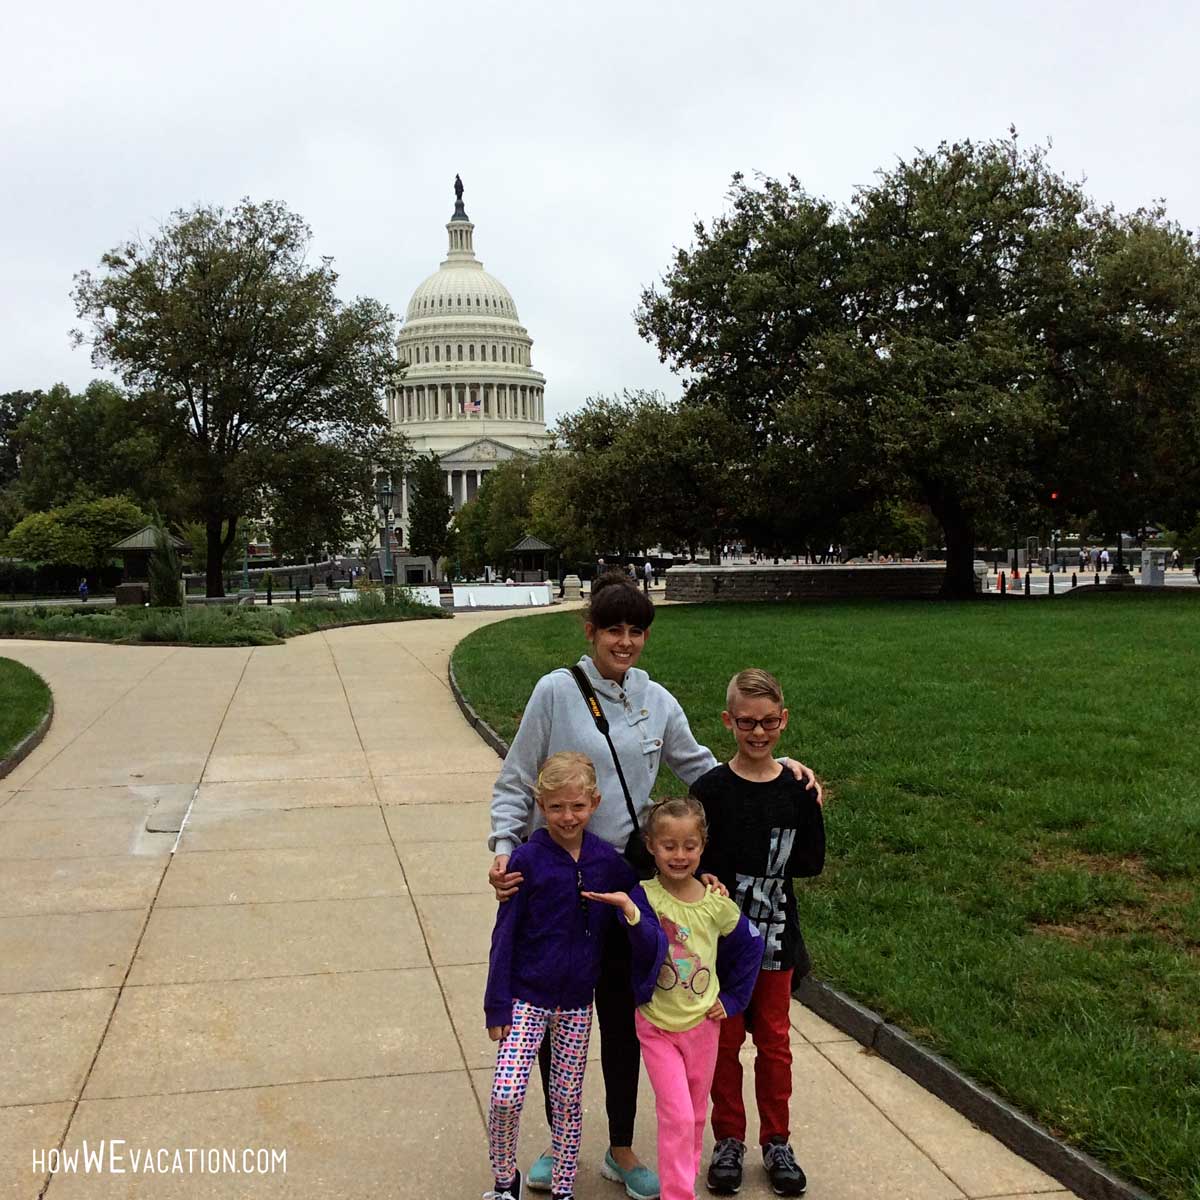 Kids at the capitol, Washington D.C.